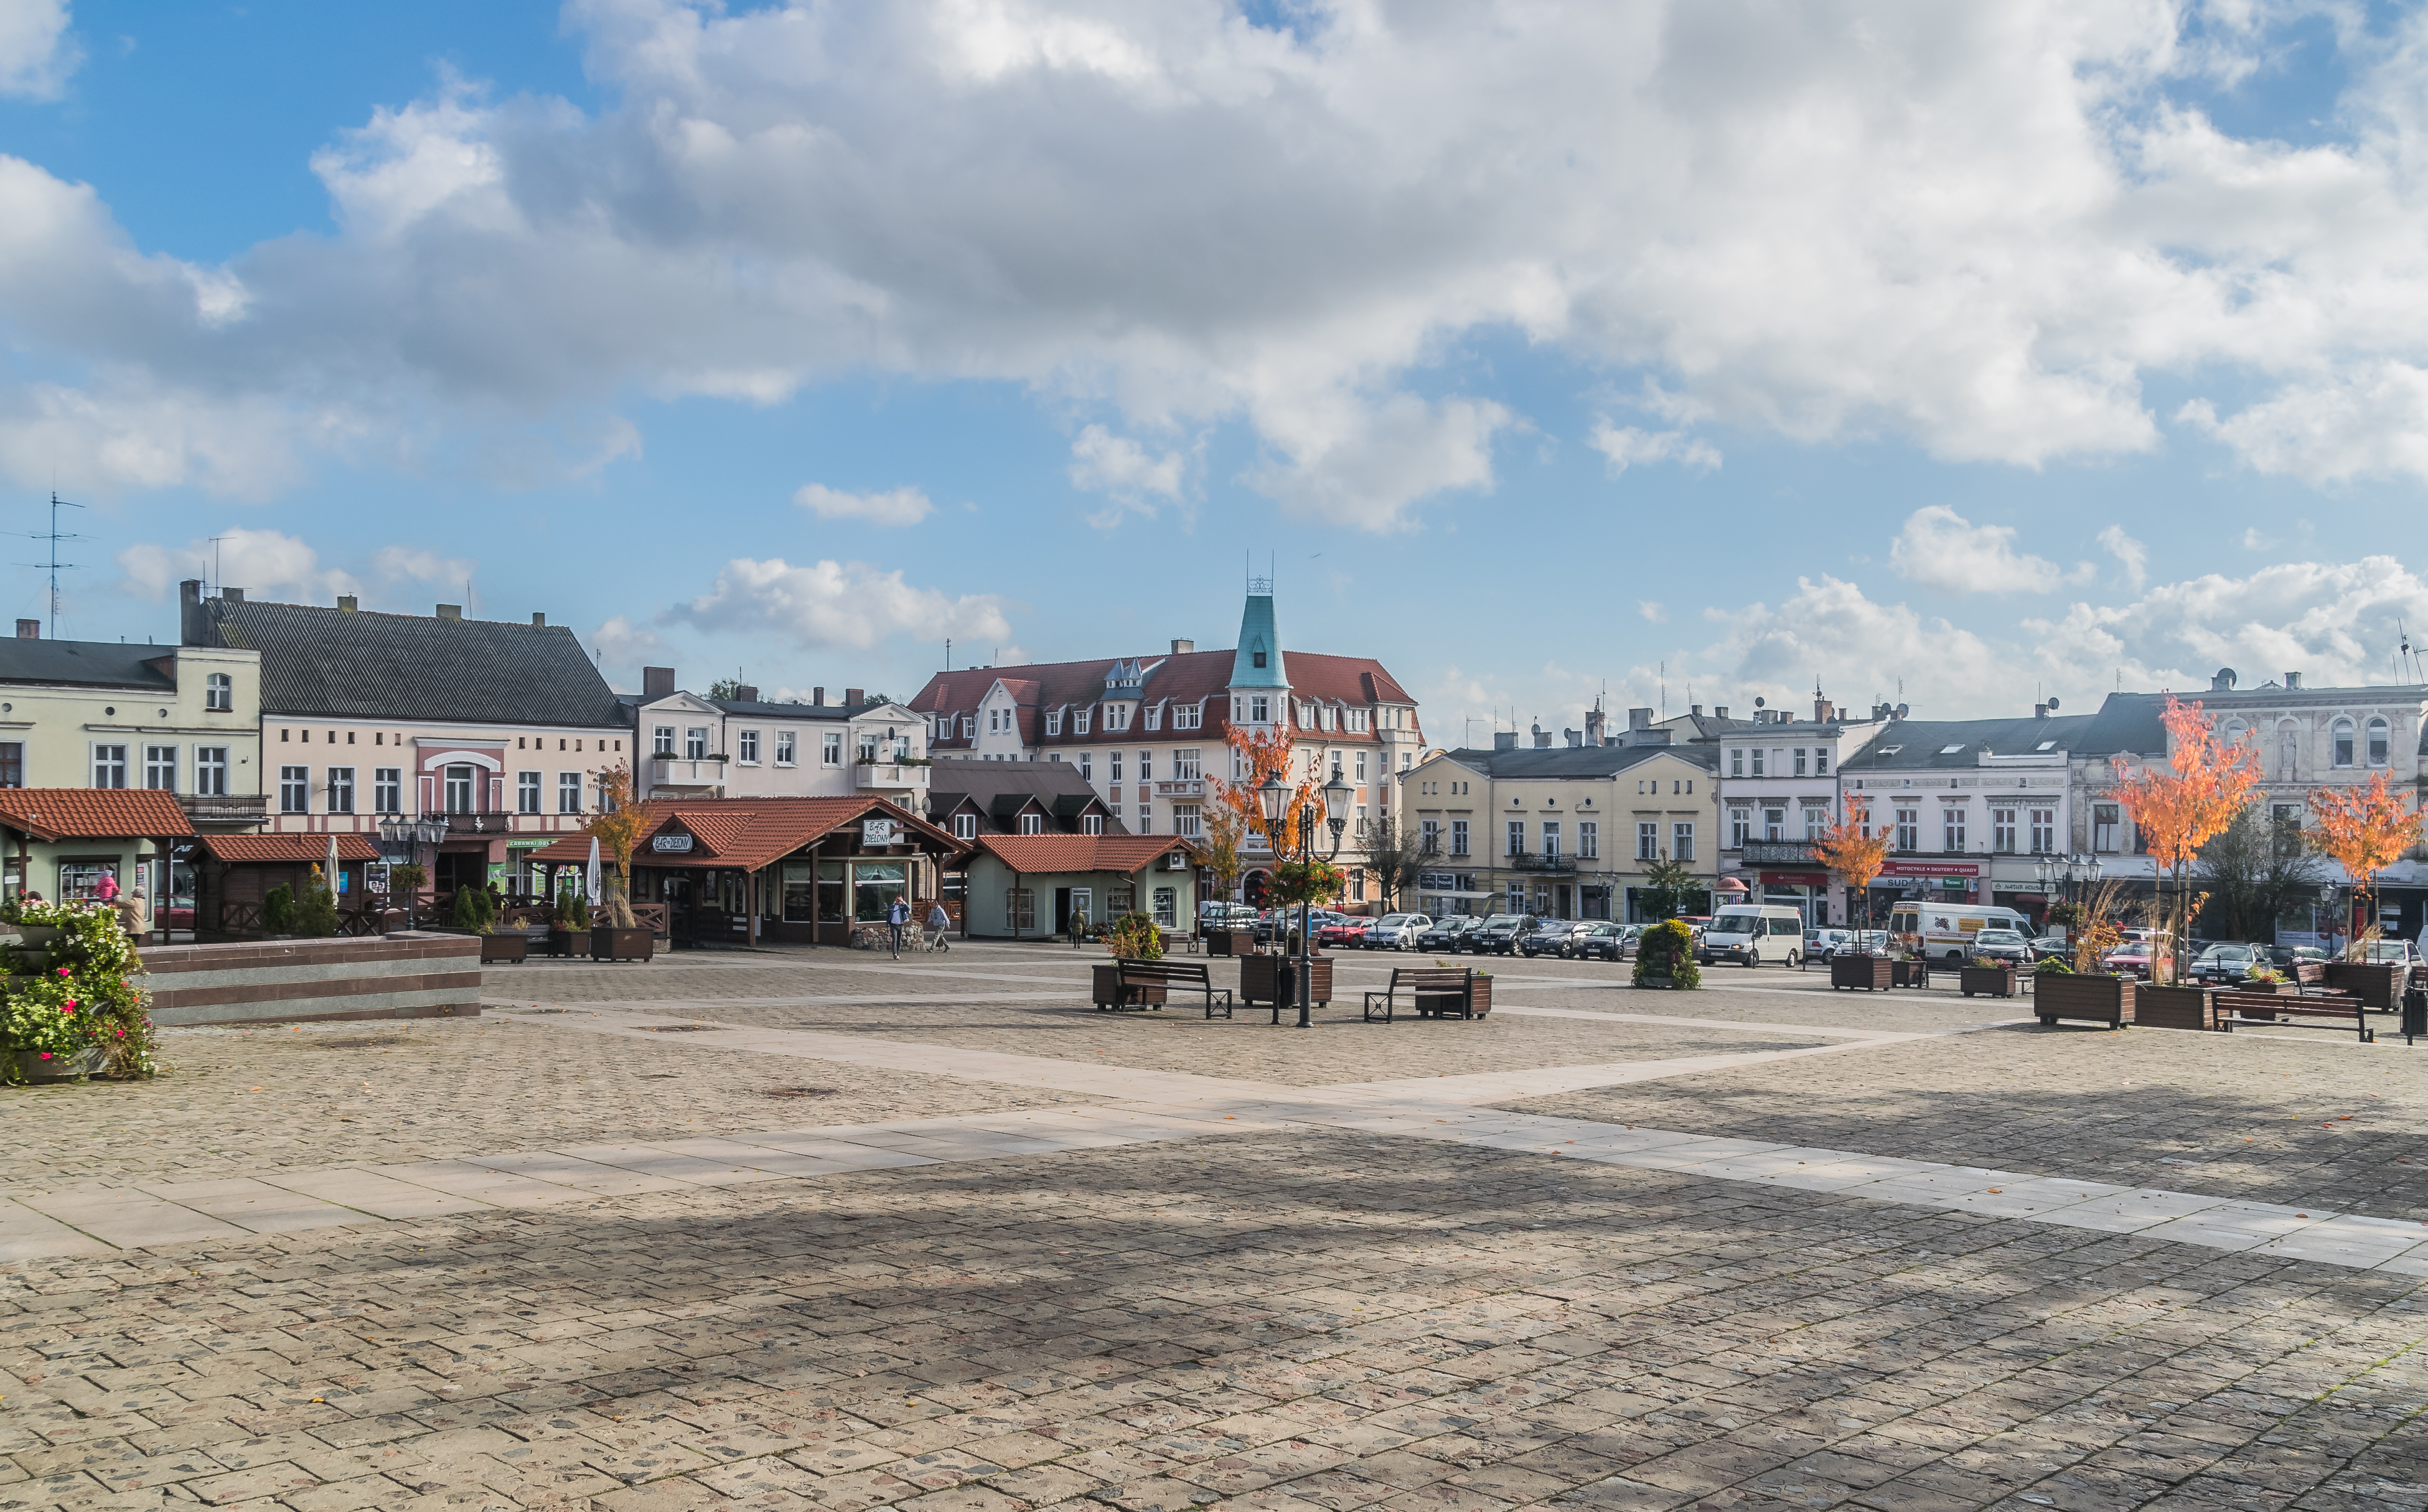 Market Square in Swiecie